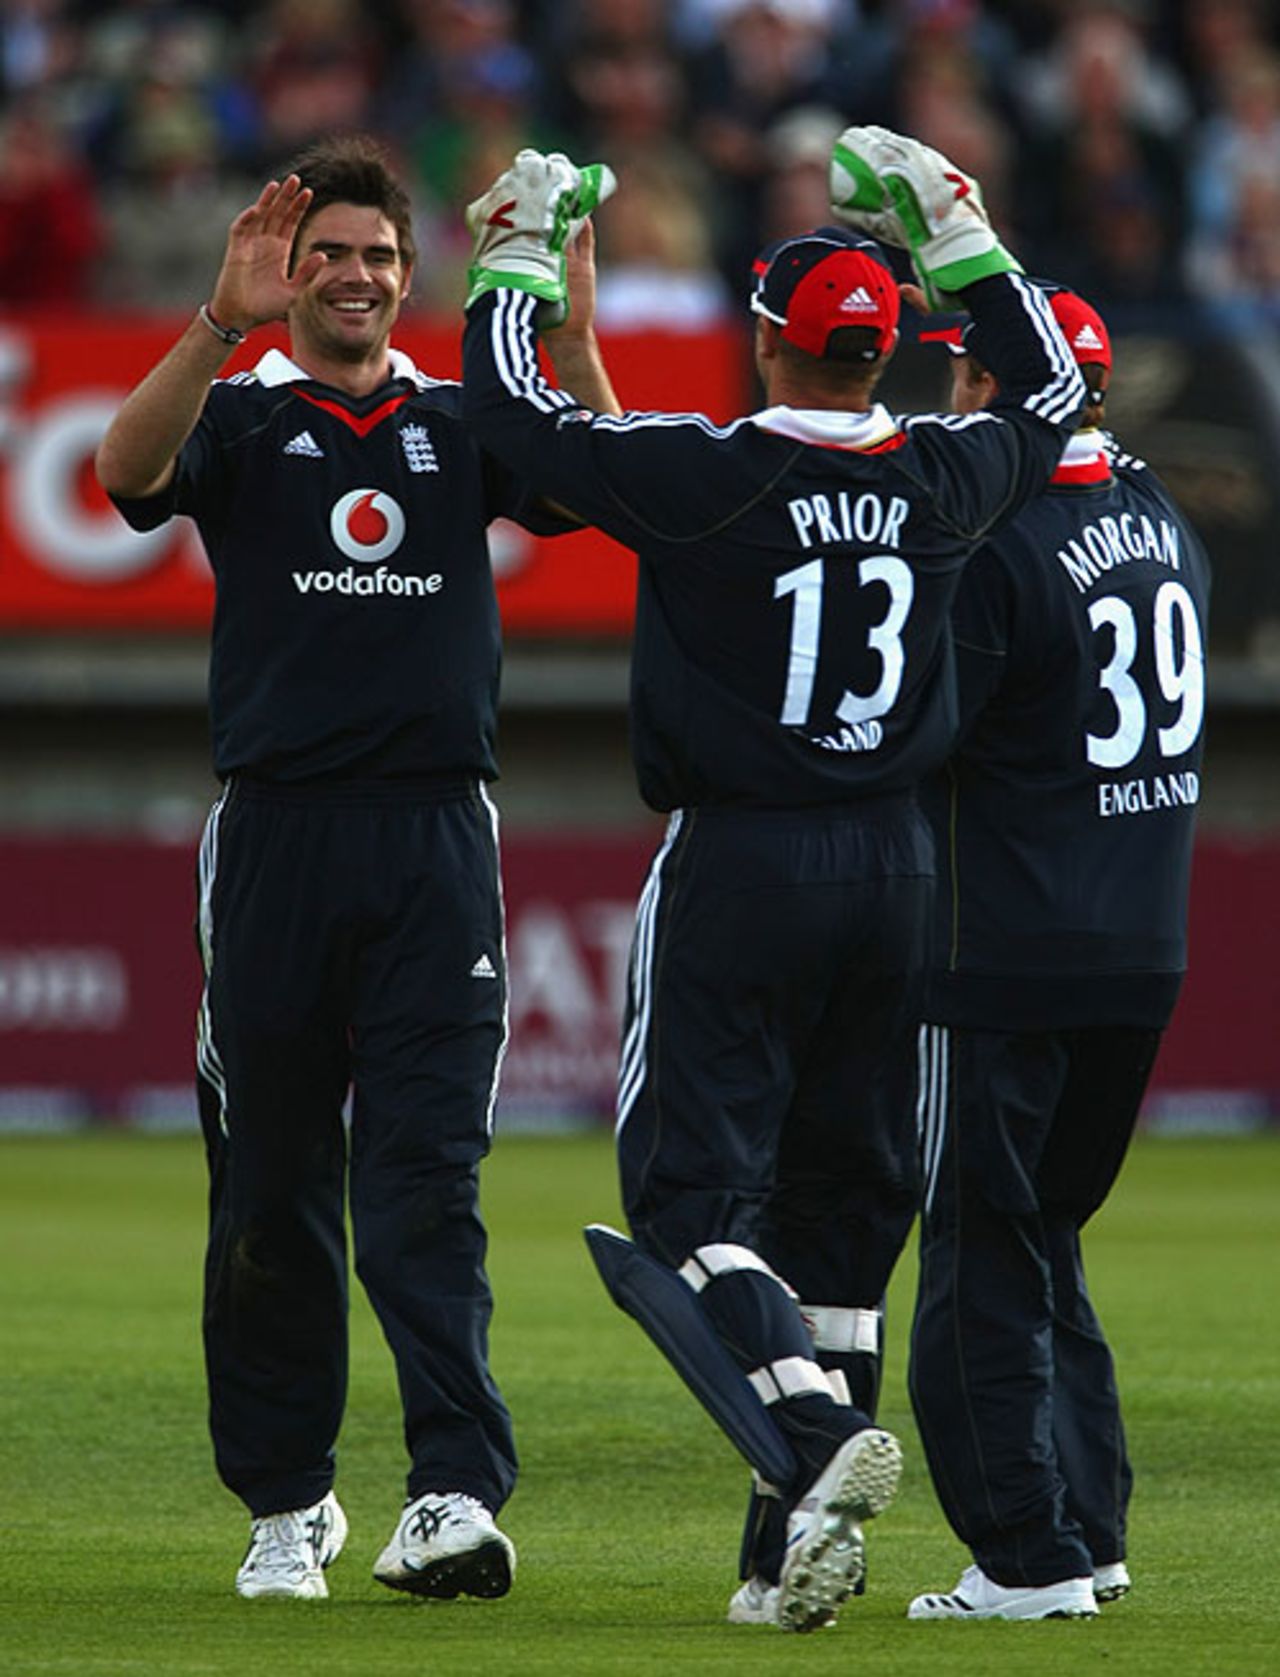 James Anderson celebrates the demise of Denesh Ramdin, England v West Indies, 3rd ODI, Edgbaston, May 26, 2009